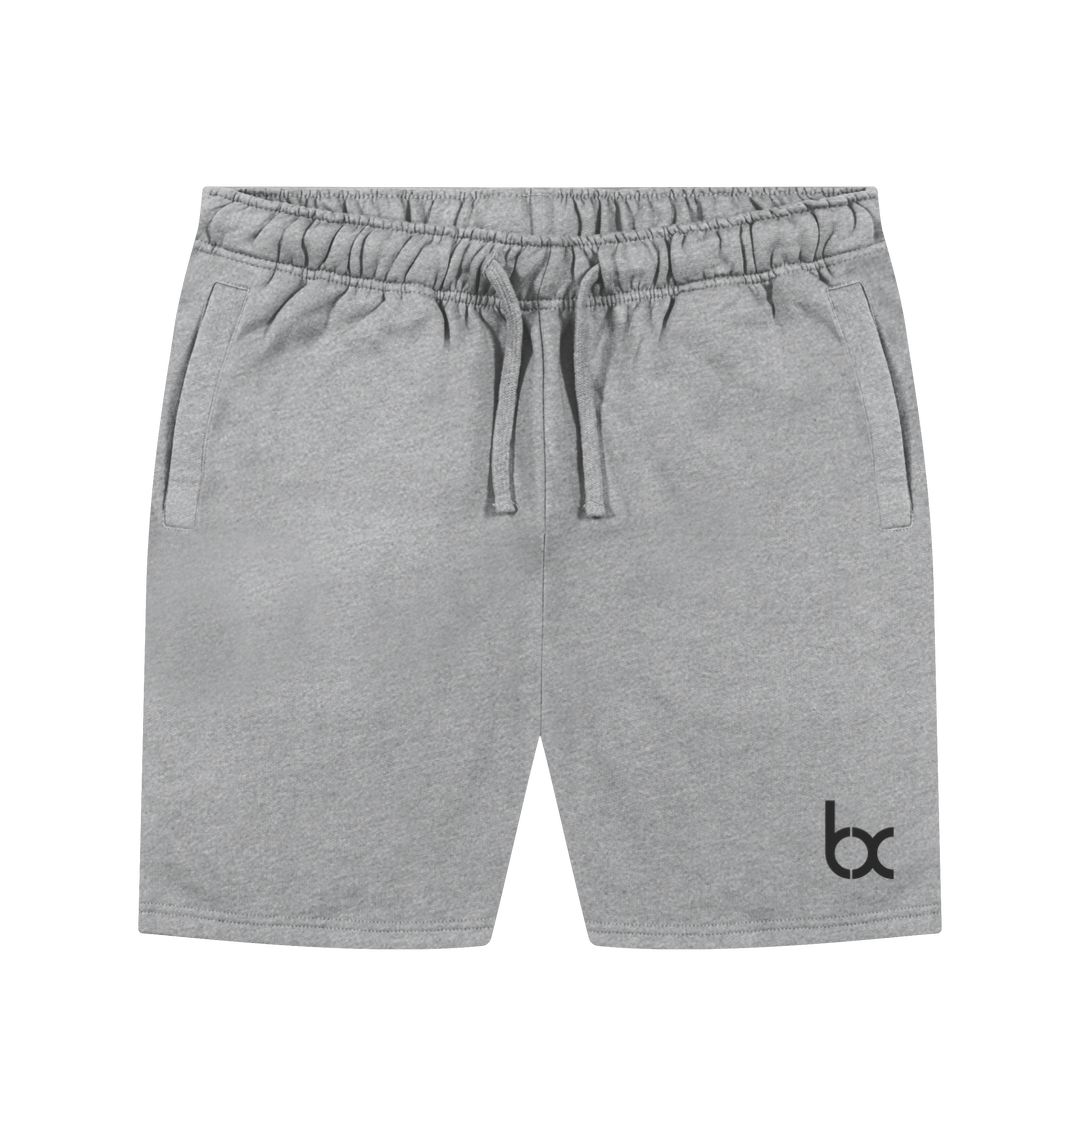 Athletic Grey BX Shorts - Grey with black logo